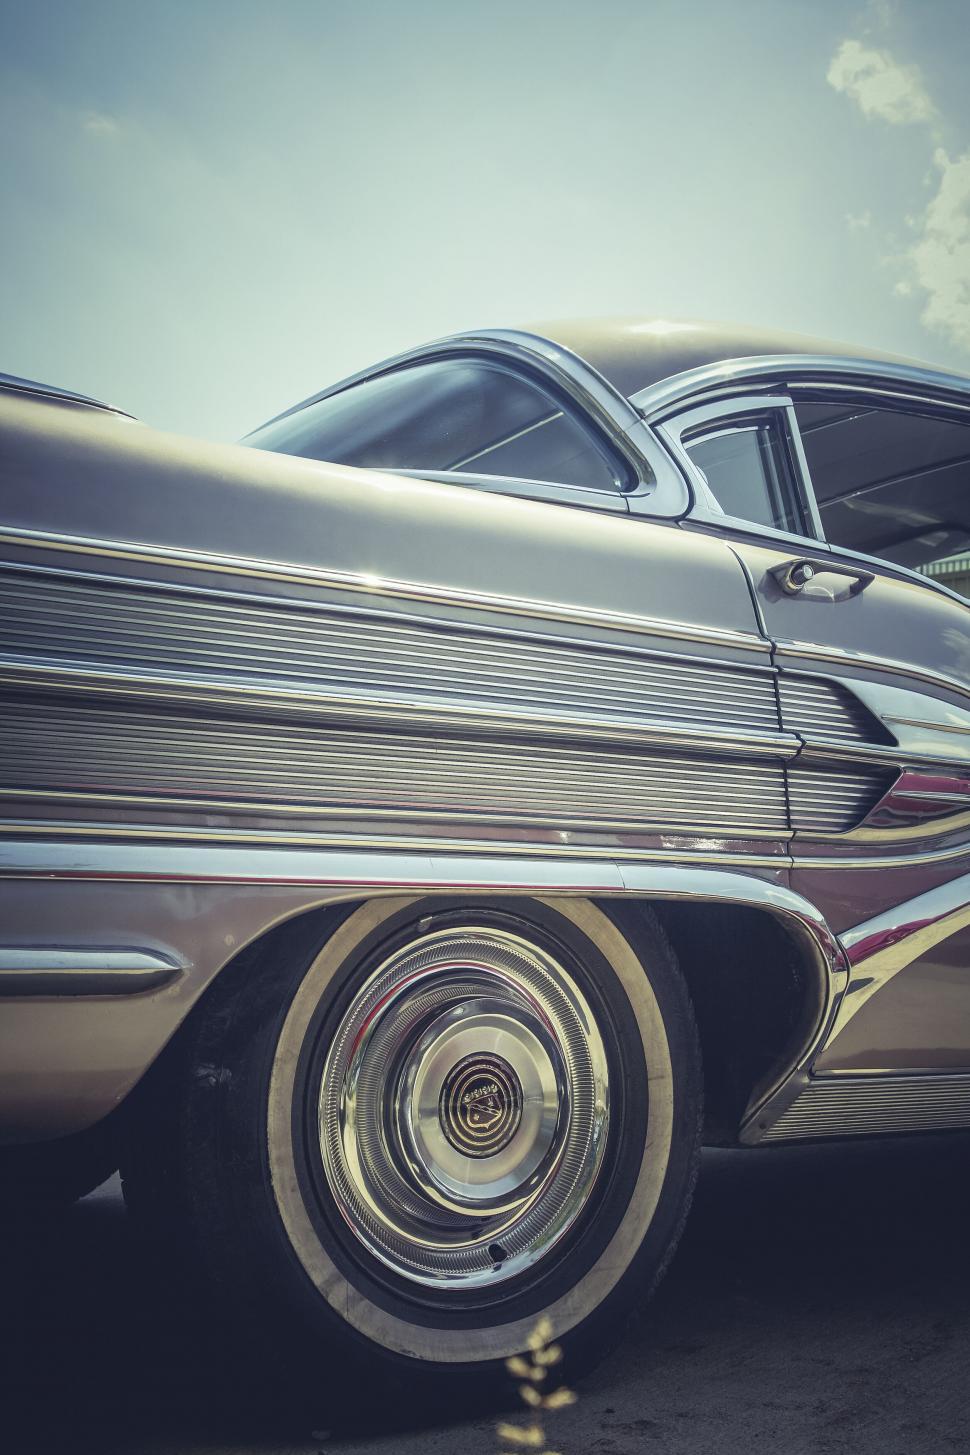 Free Image of Vintage car showcasing shiny chrome details 